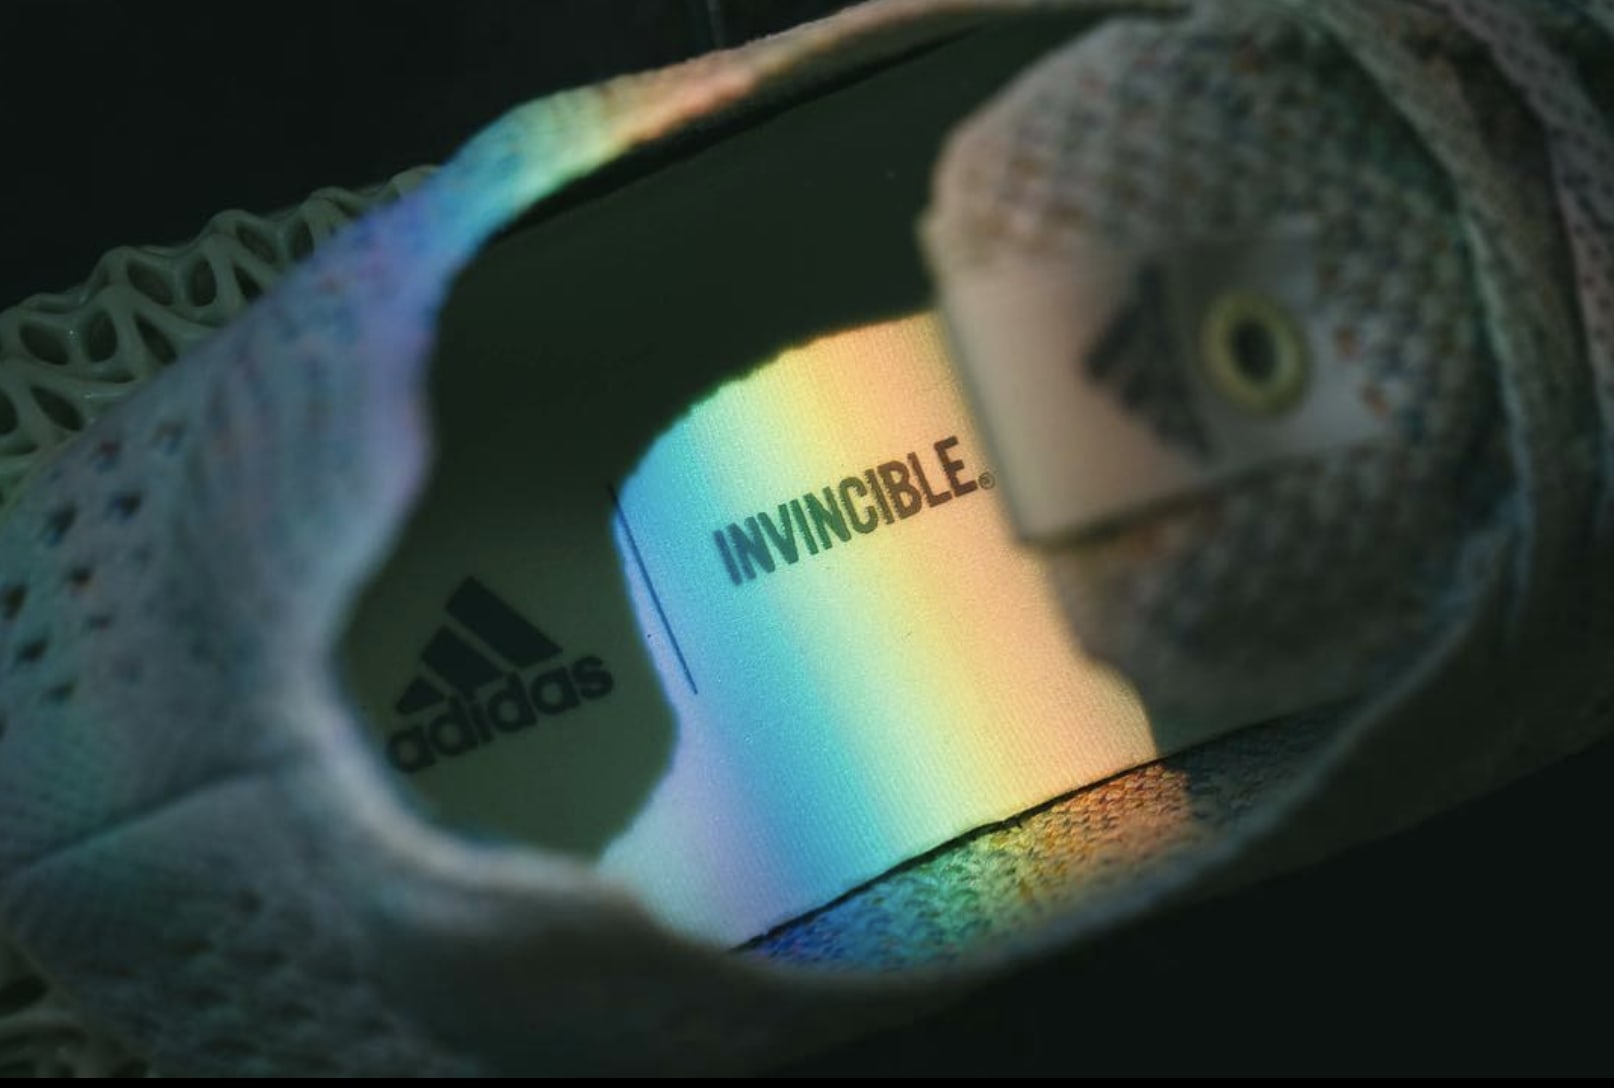 Invincible x Adidas Consortium 4D (Insole)